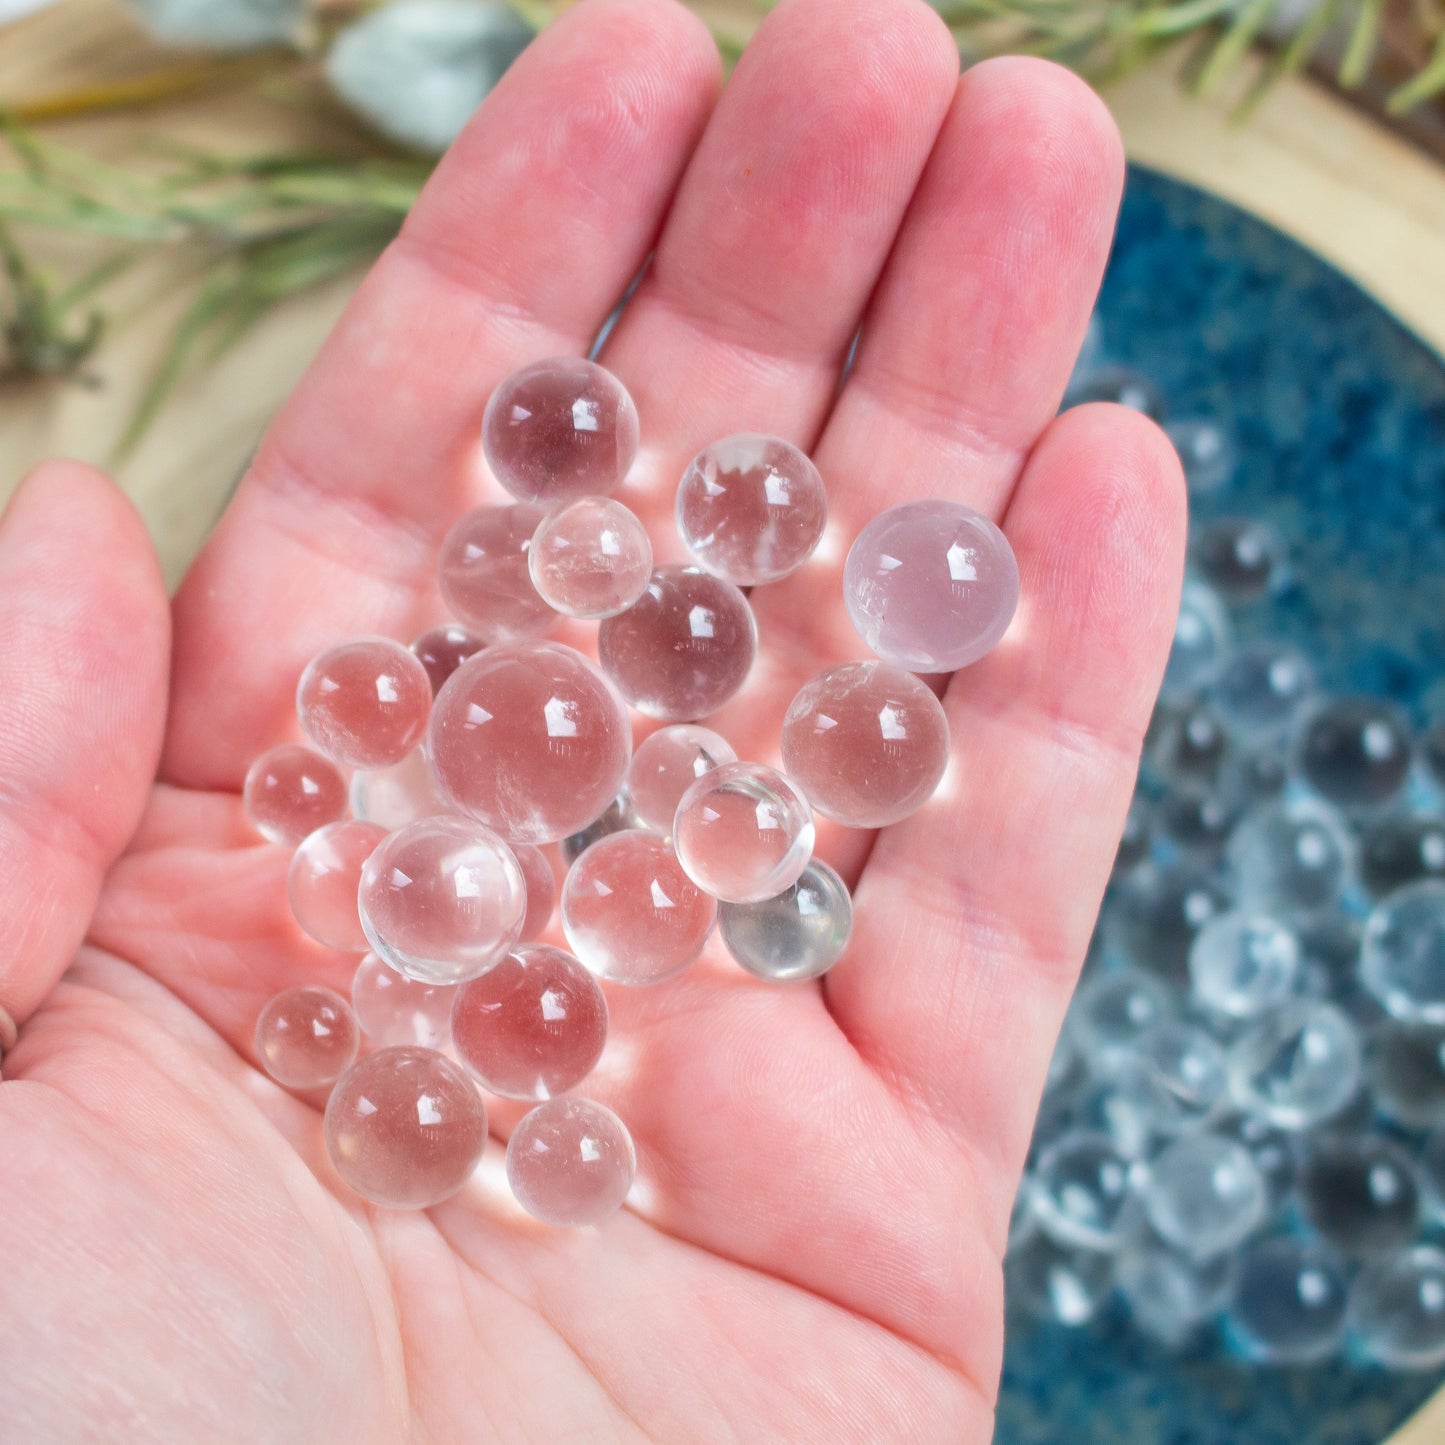 6 Clear Quartz Crystal Mini Spheres, 5-10mm